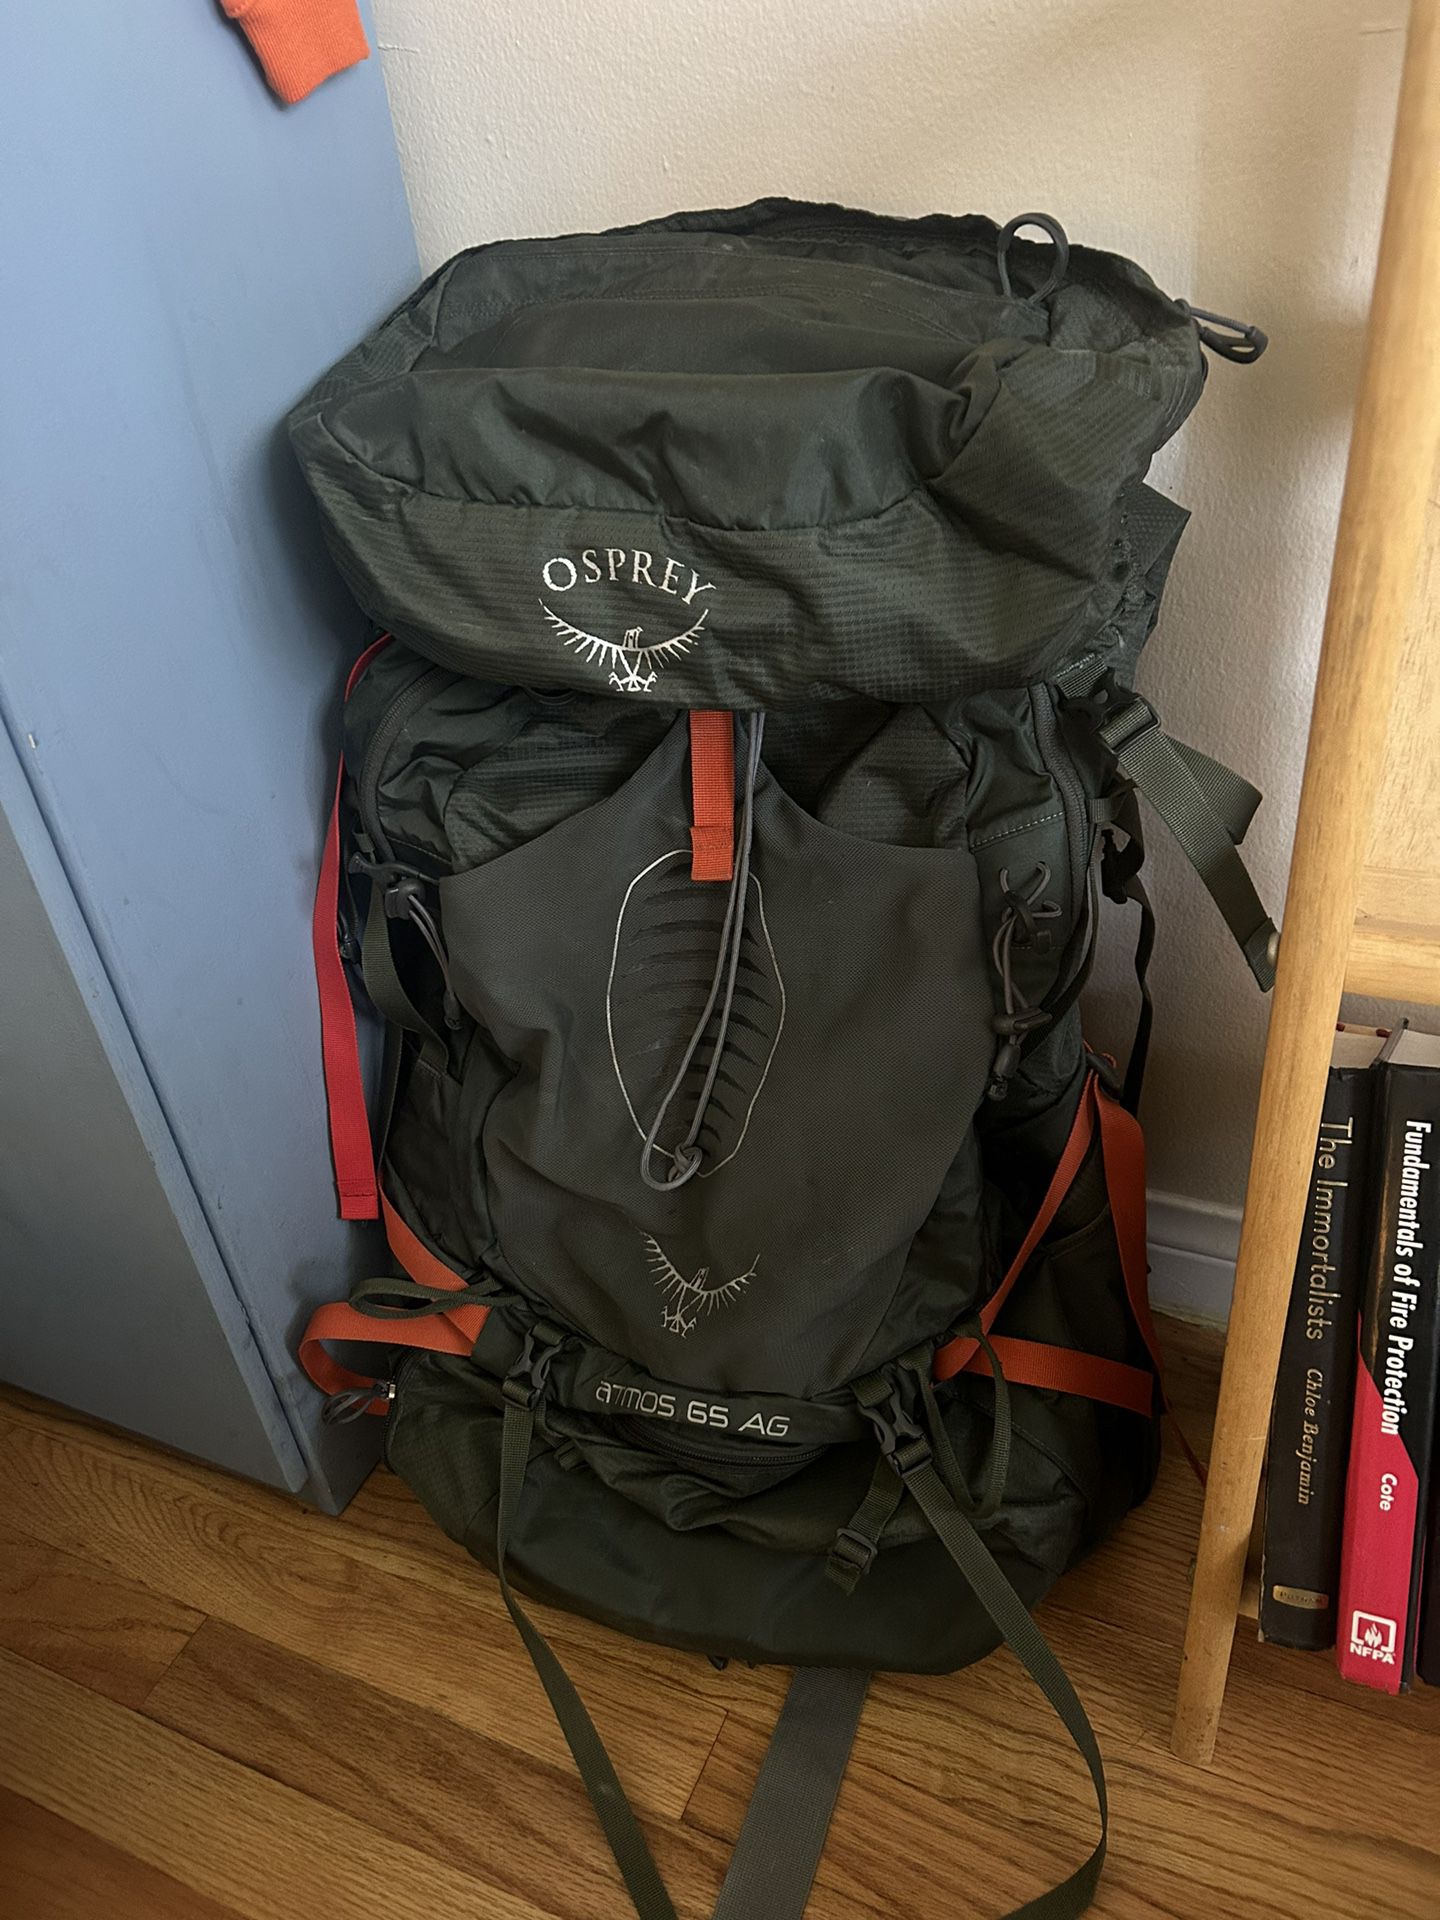 Osprey Atmos 65 AG Backpacking Backpack